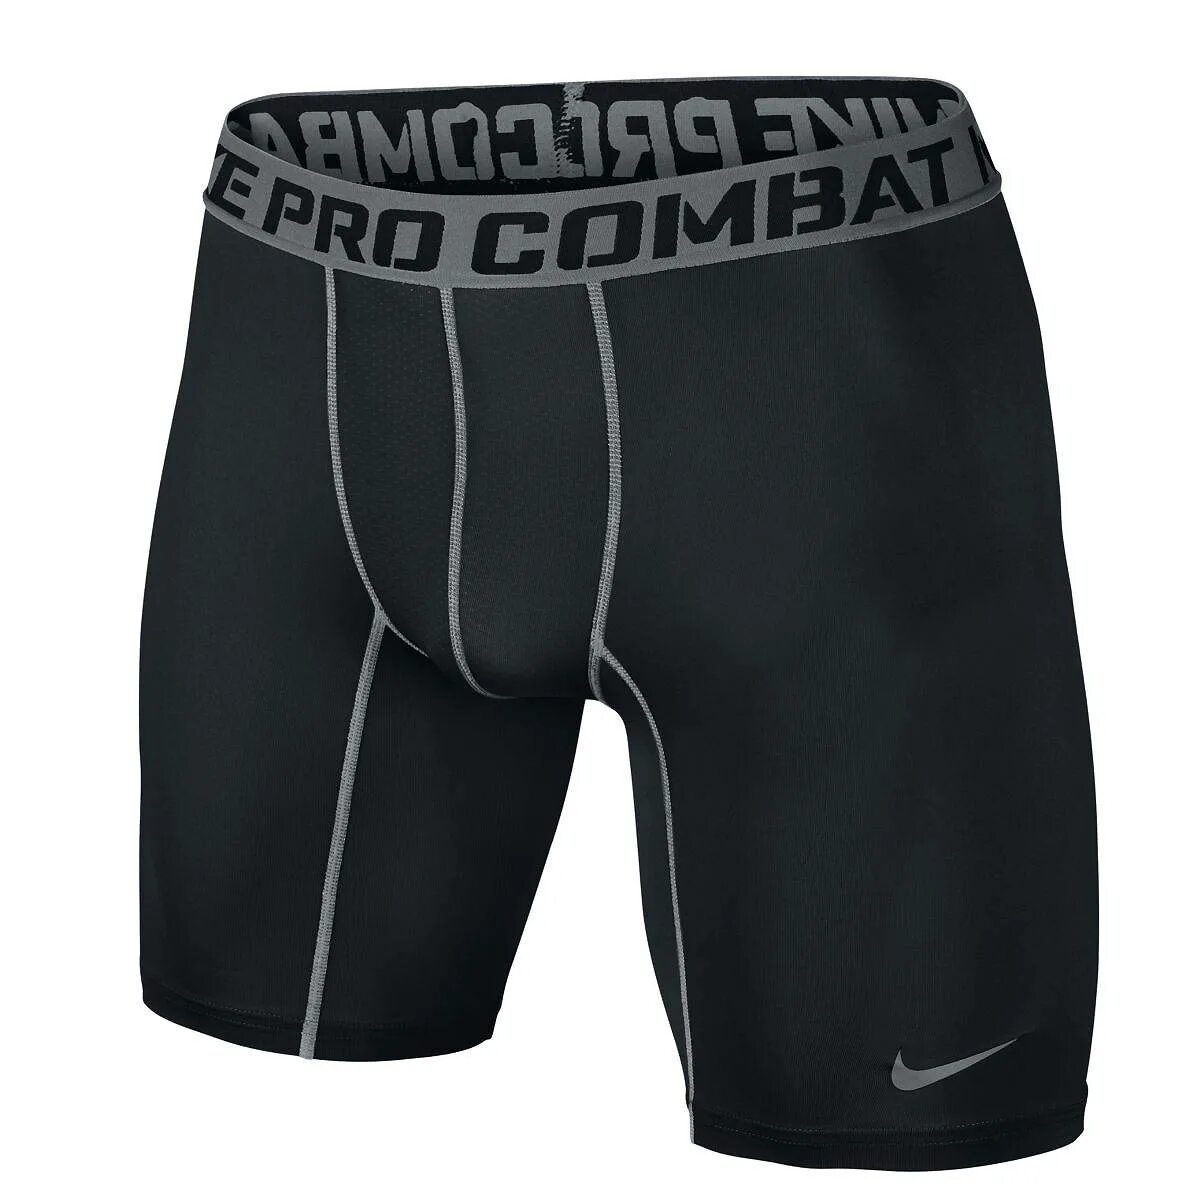 Nike combat. Компрессионка Nike Pro Combat. Компрессионные шорты Nike Pro Combat. Nike Pro Combat Dri-Fit Compression шорты. Термо Nike Pro Combat.